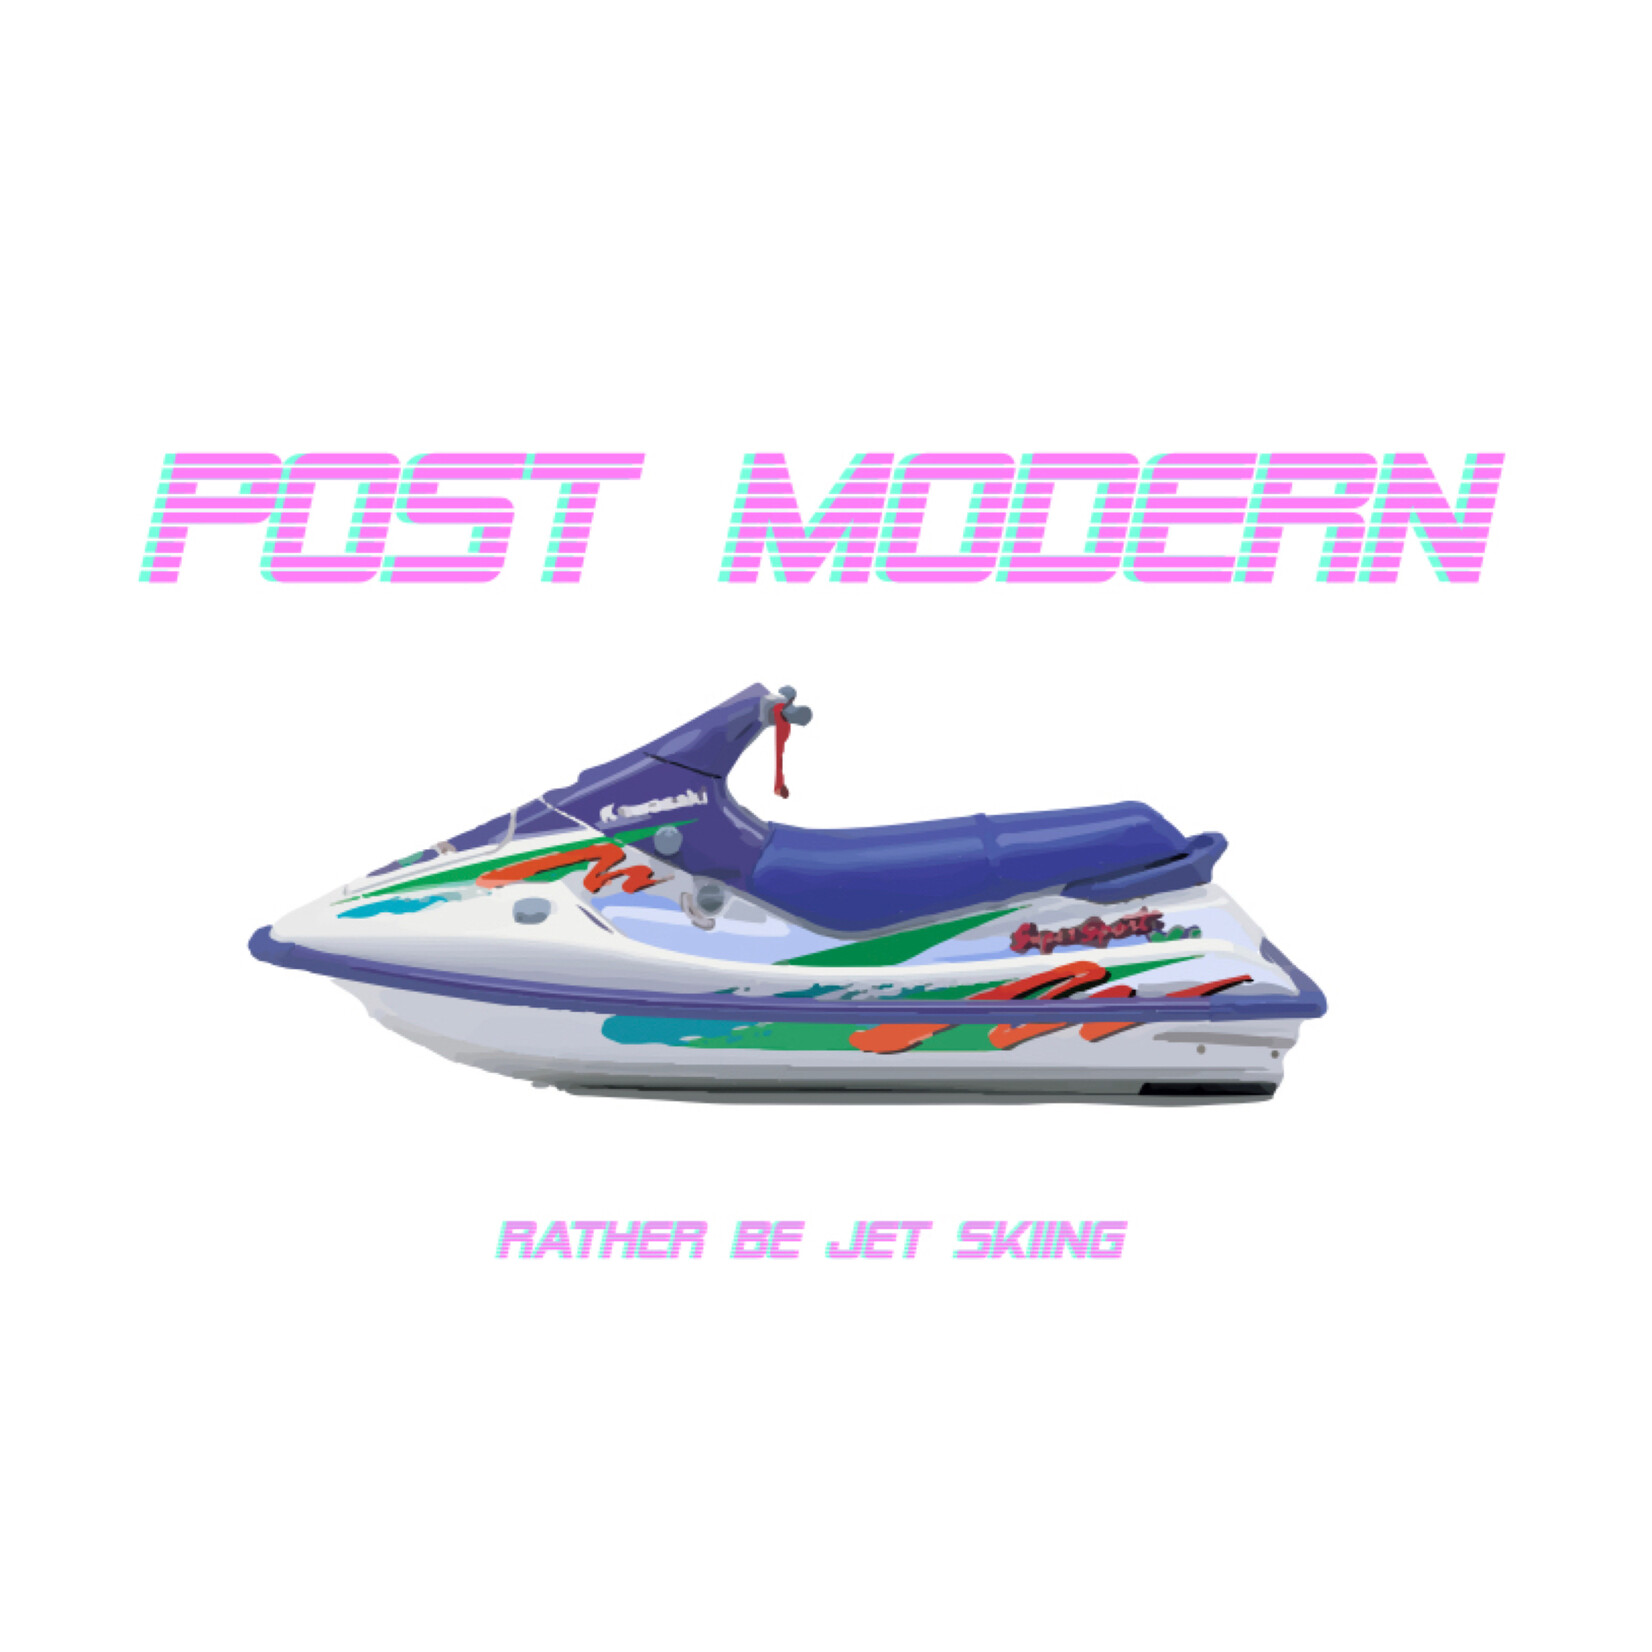 Post Modern Post Modern “Rather Be Jet Skiing” Tee Black